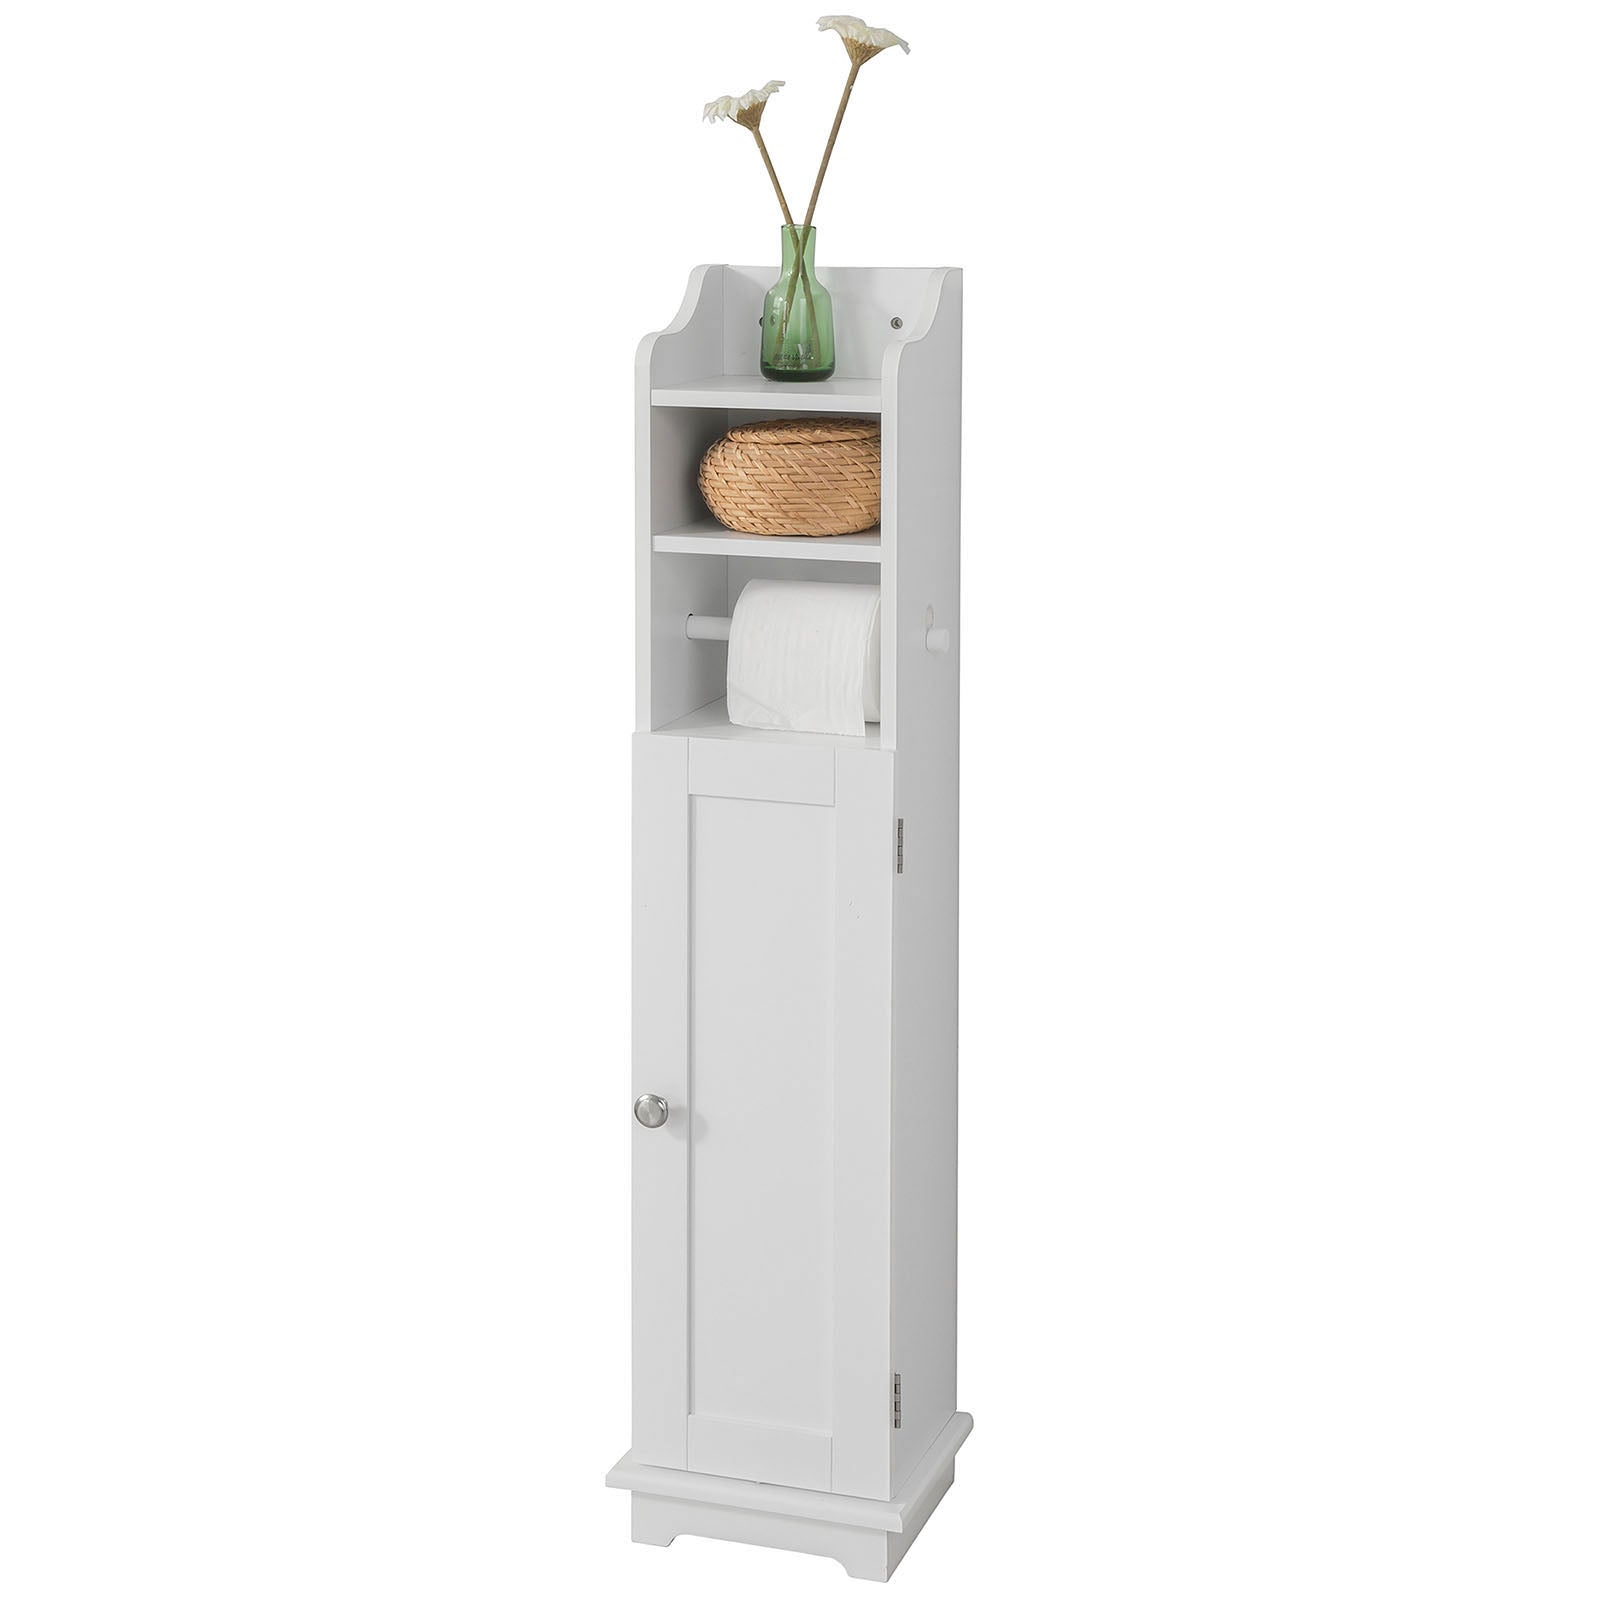 SoBuy Wooden Bathroom Toilet Paper Storage Cabinet FRG177-W